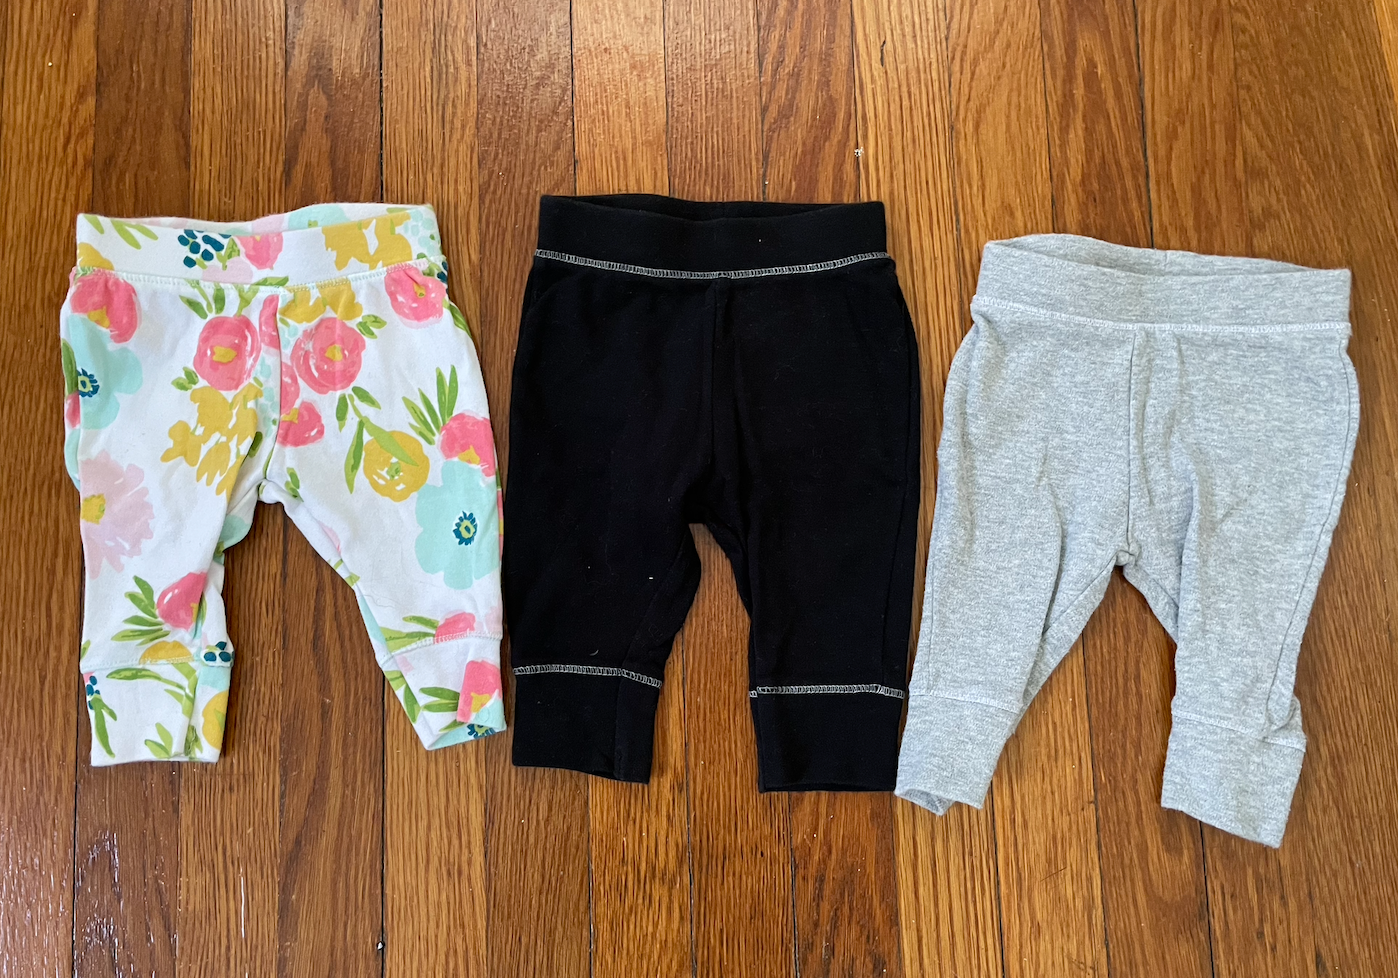 Cloud Island set of 3 pants - 3 month girls pants, gray, black, floral pants - EUC